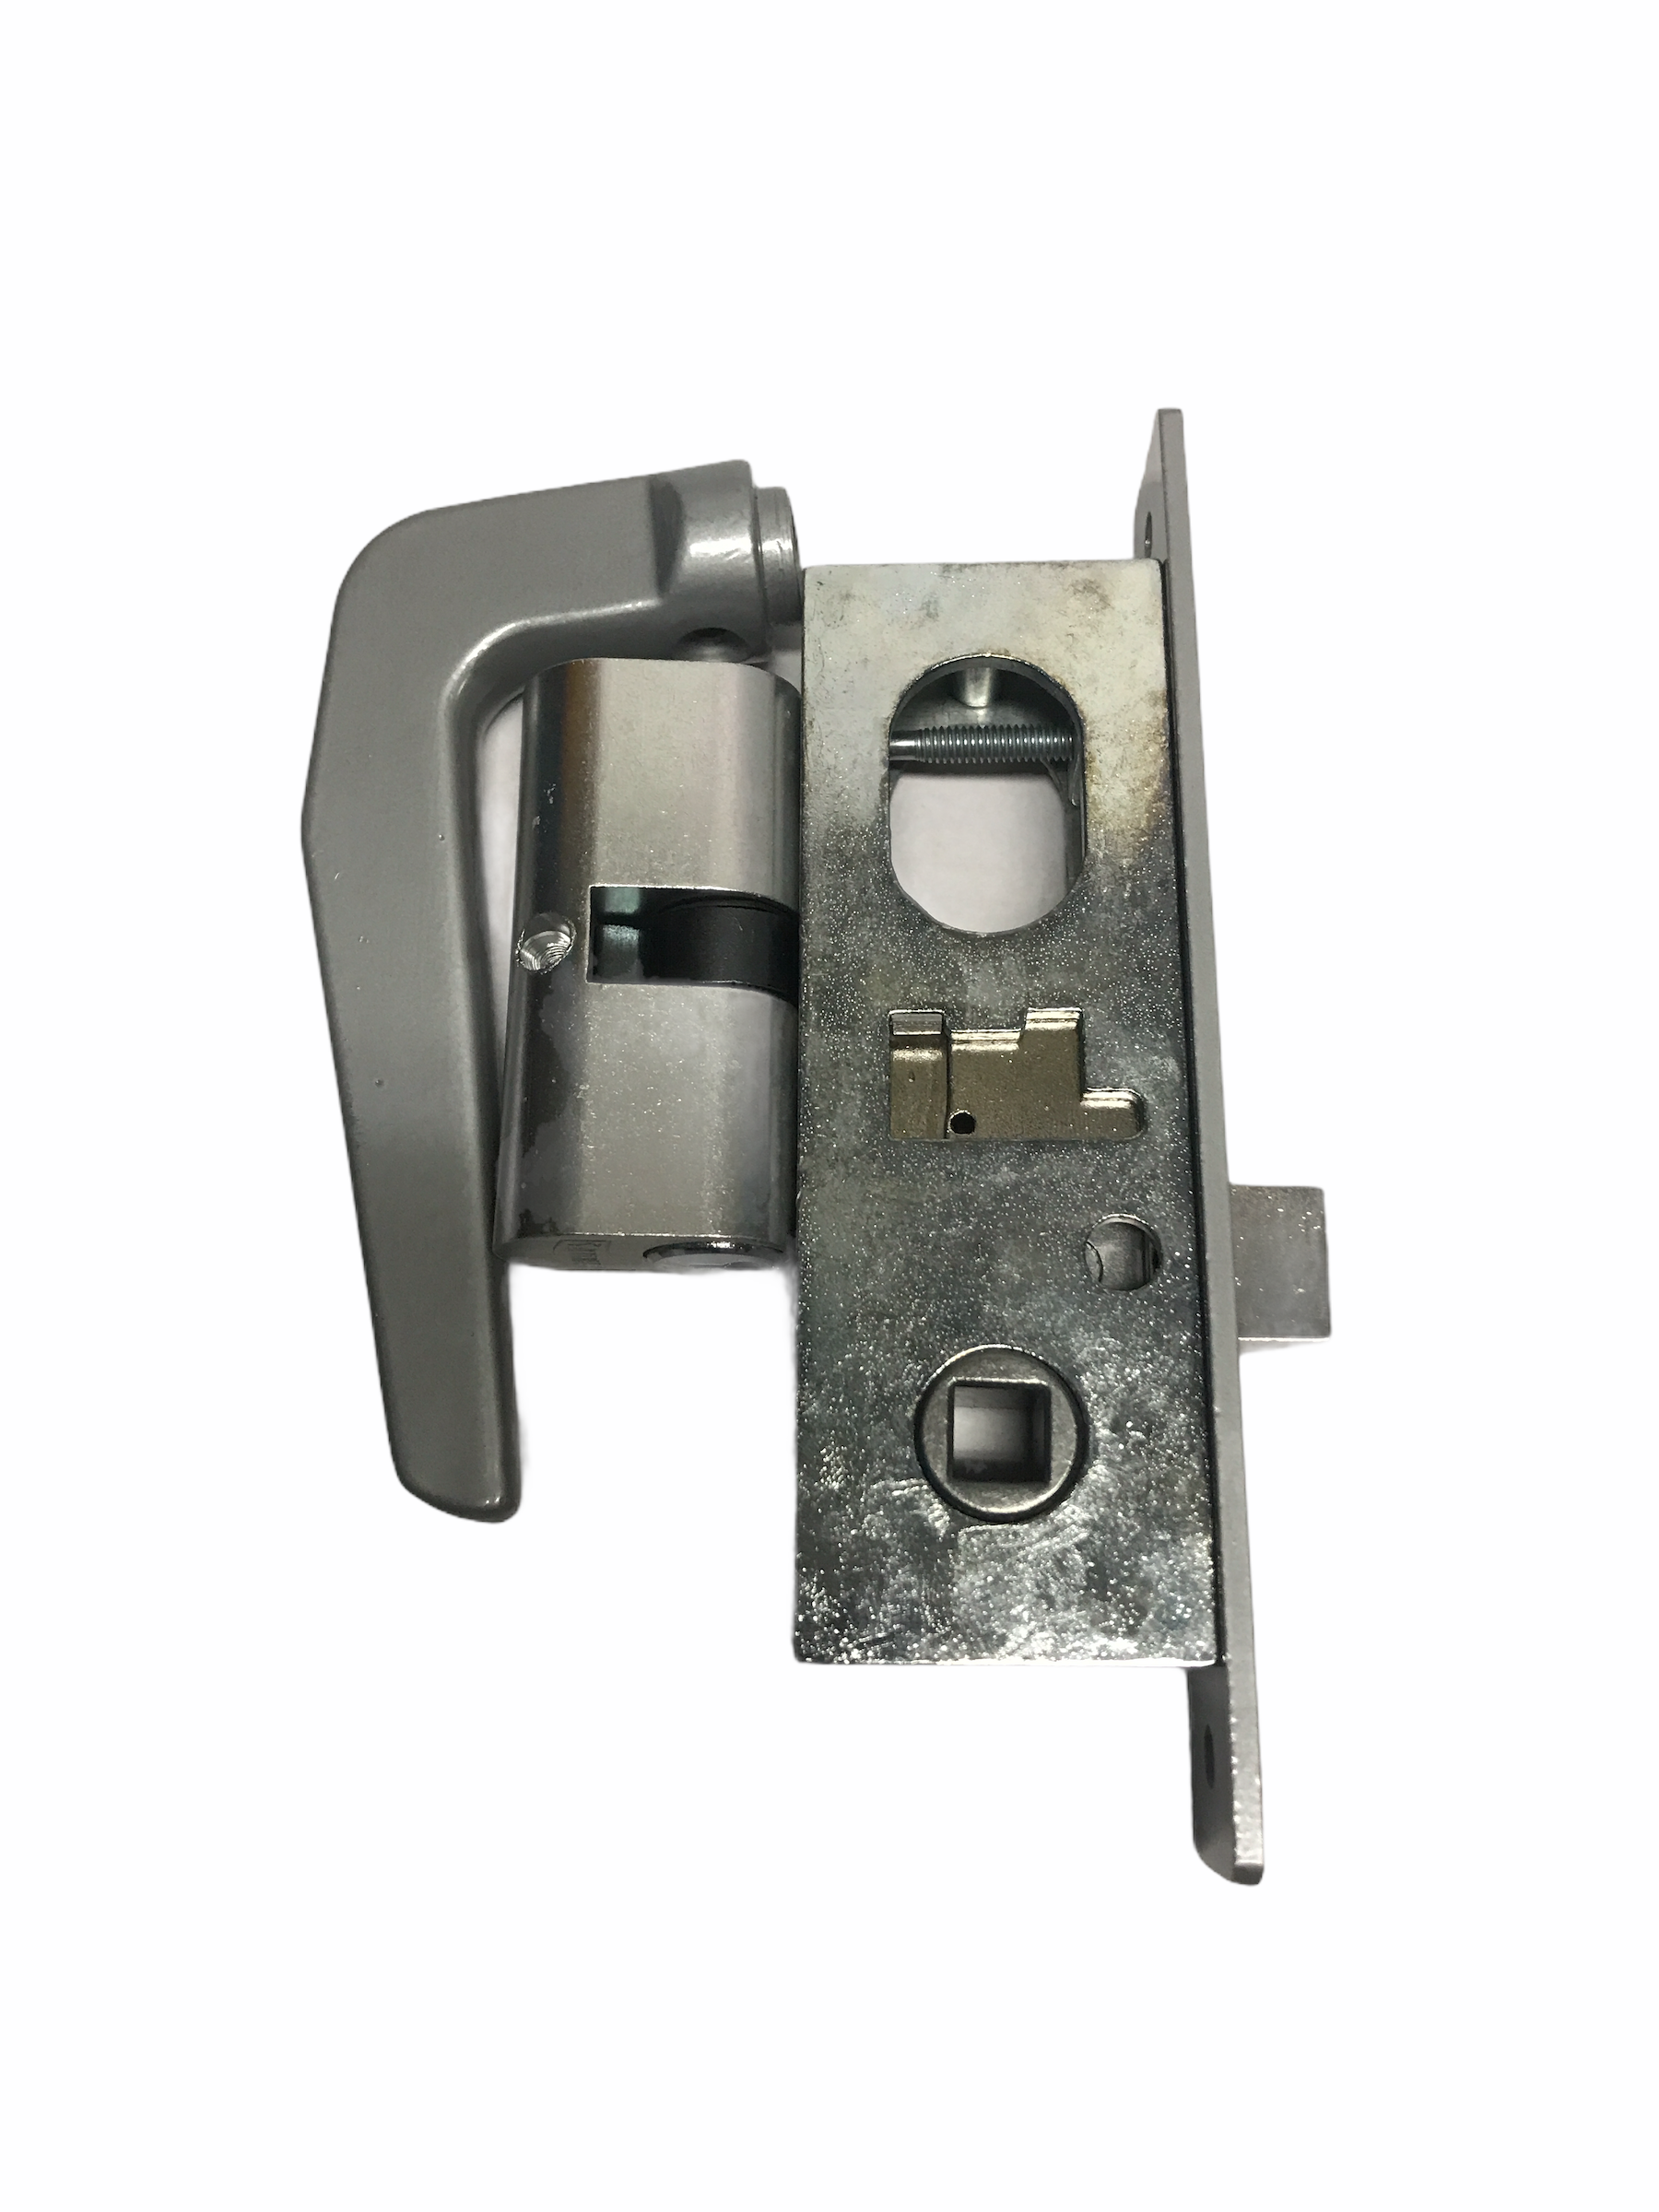 Wholesale cerradura para puerta aluminio for Smooth and Easy Replacement 